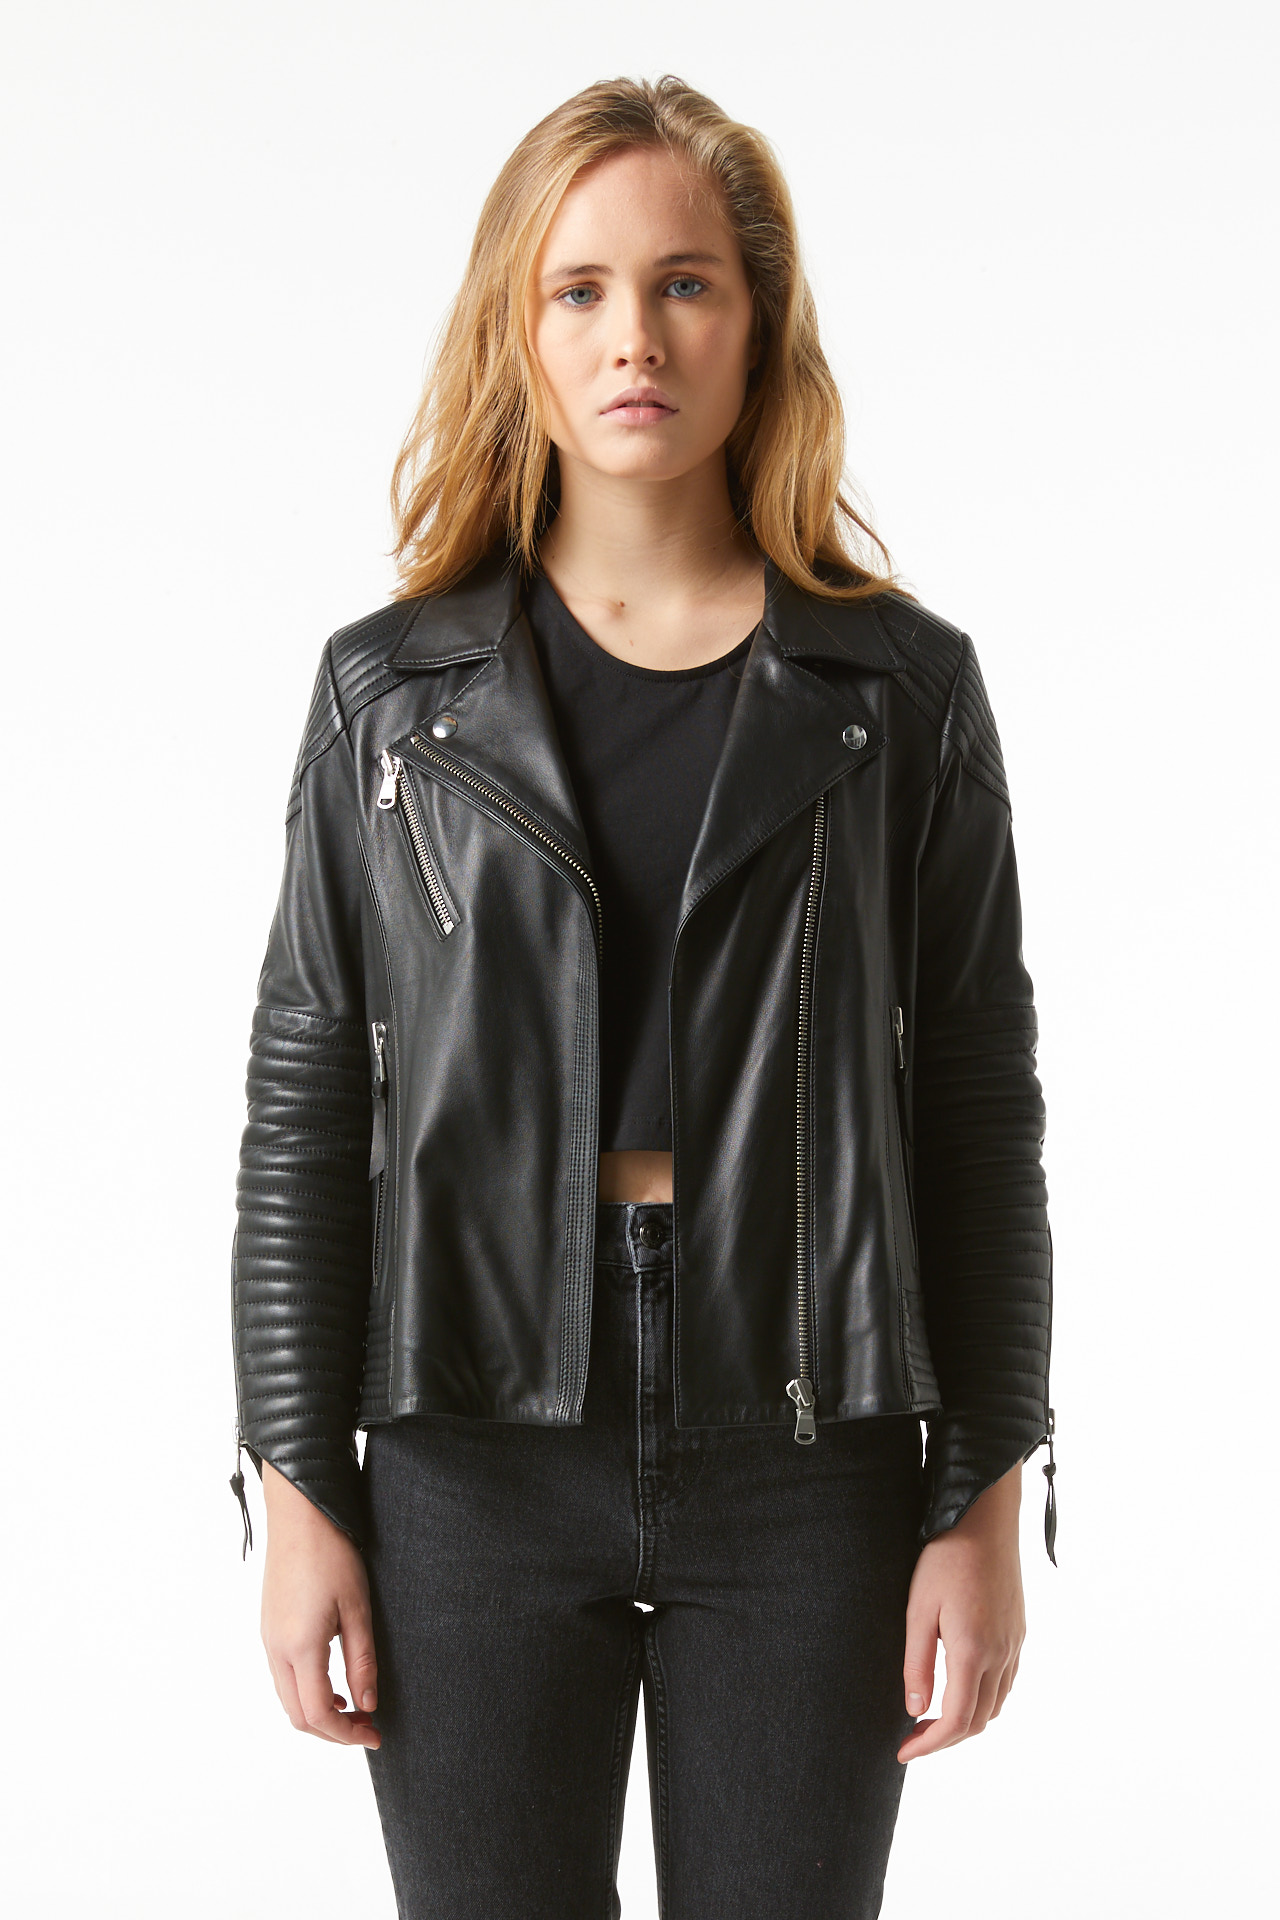 Front of model wearing black biker jacket